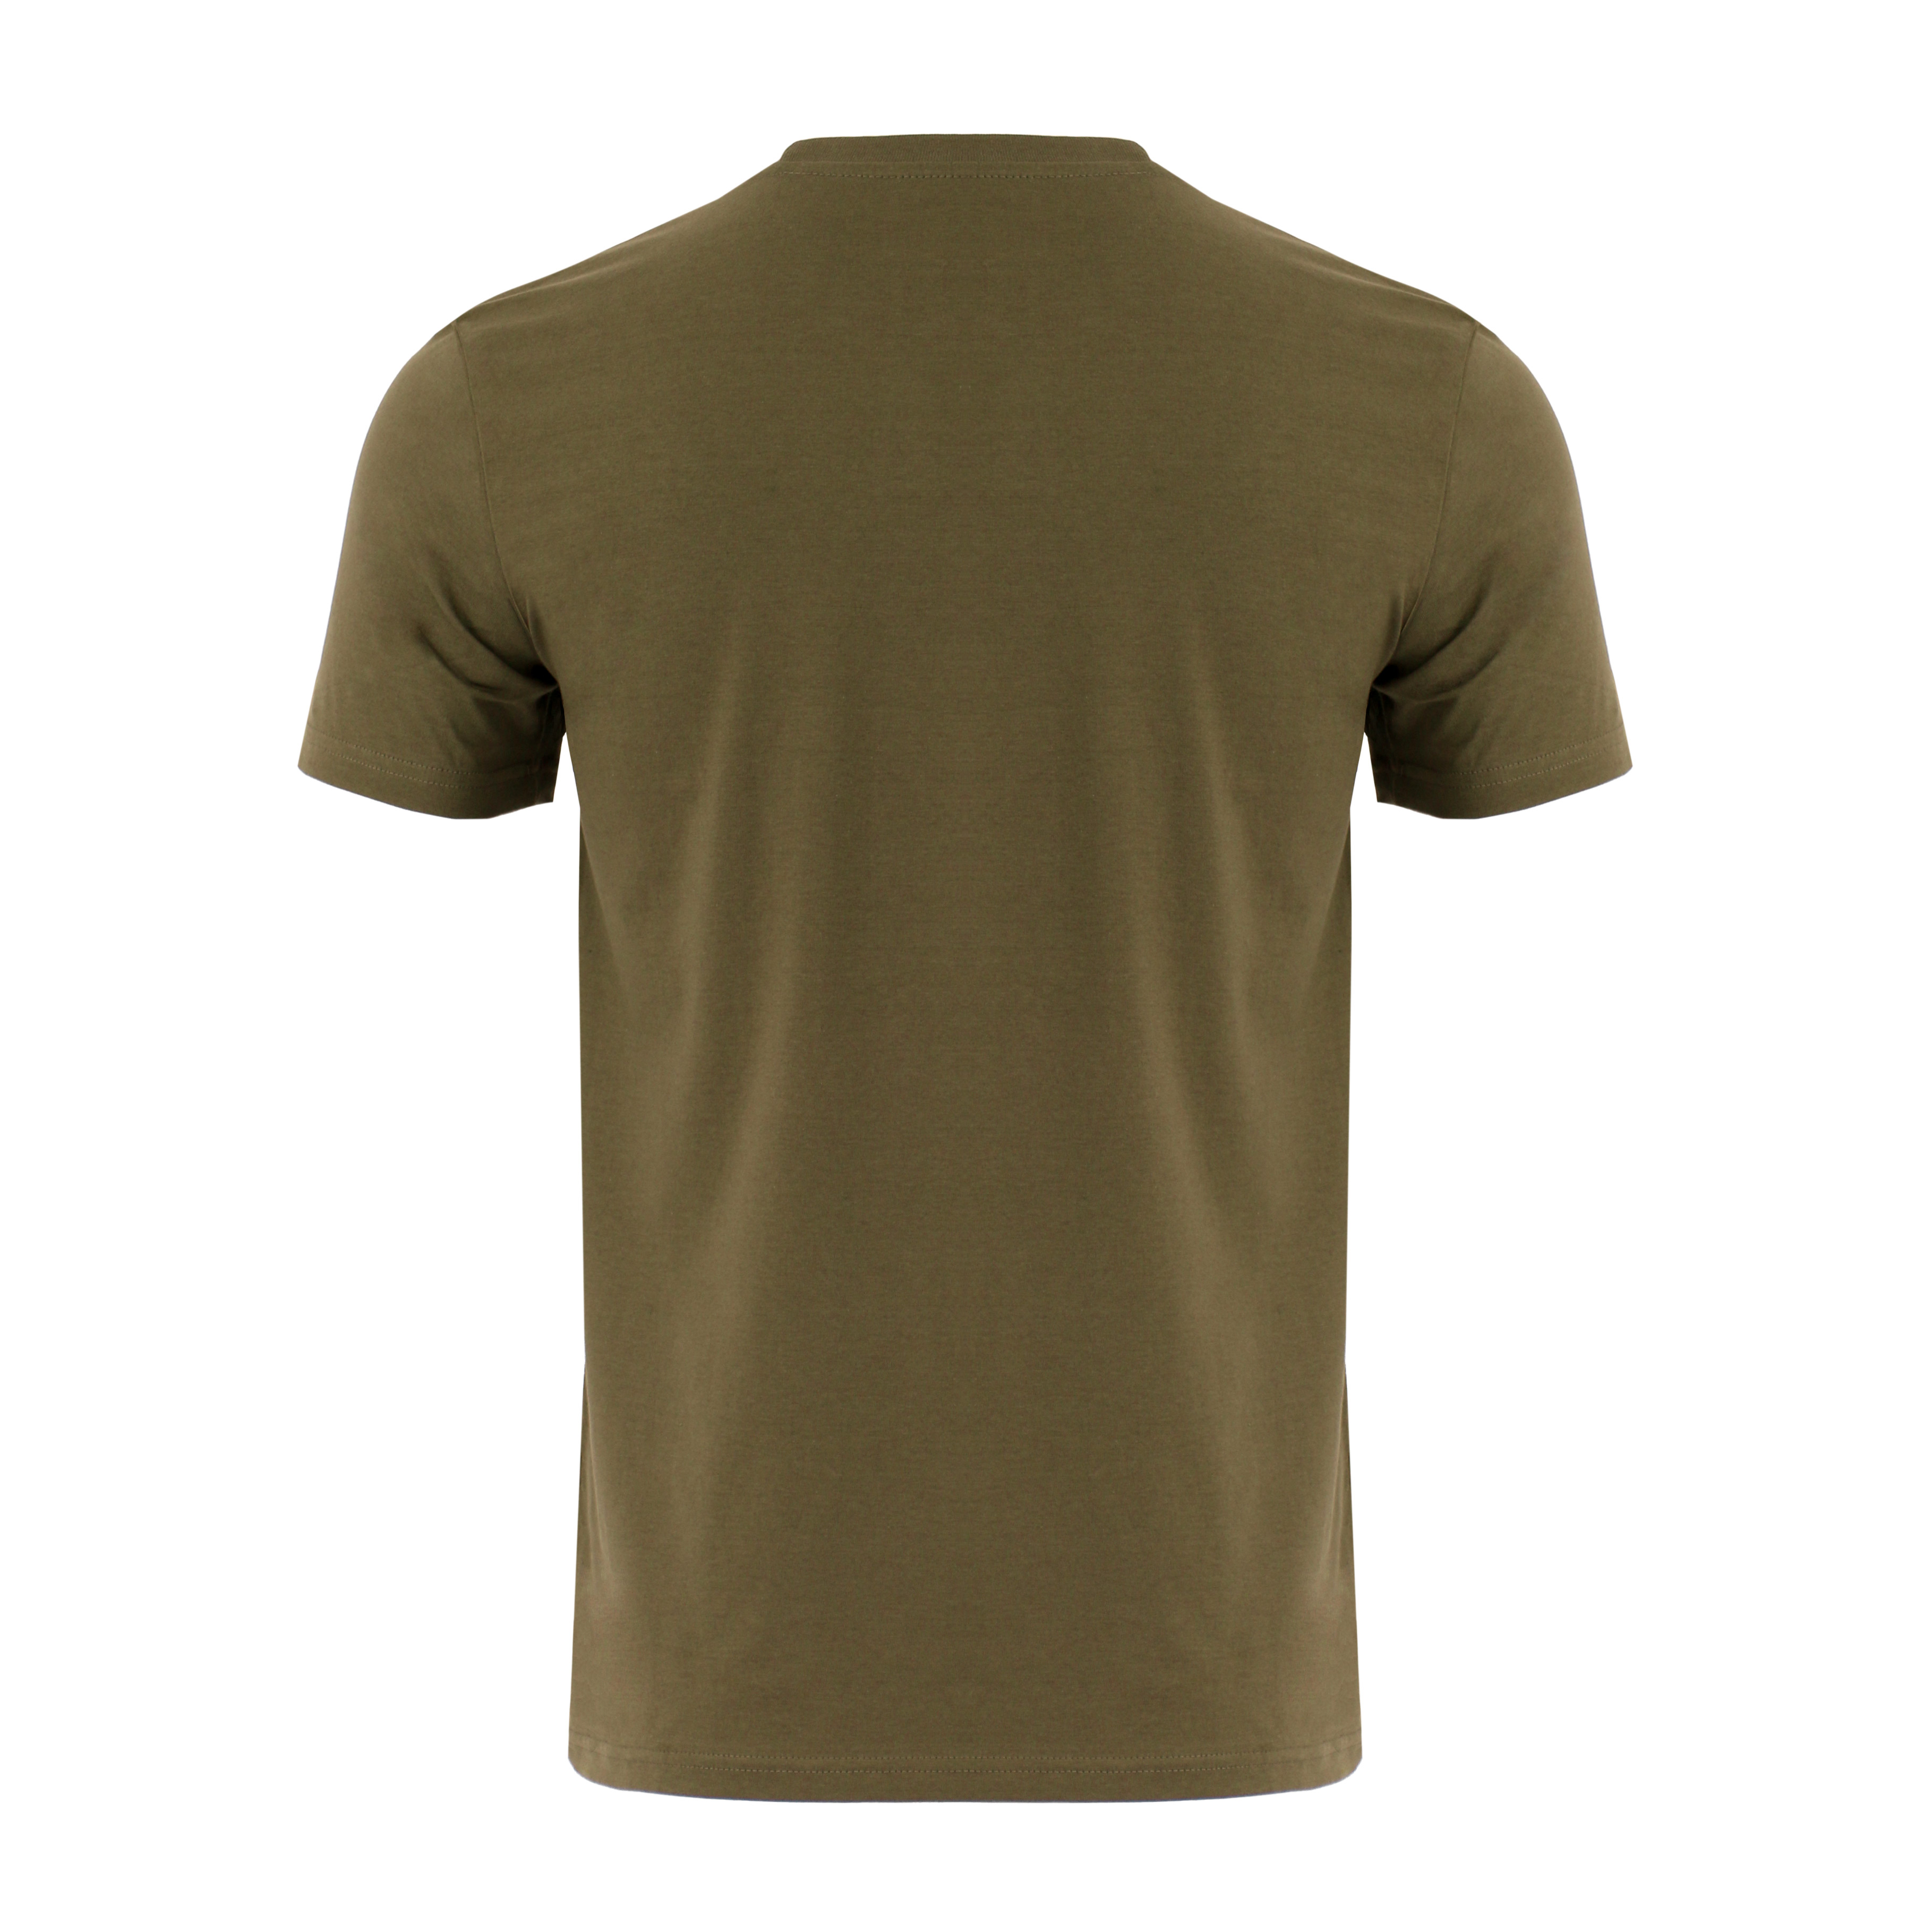 ARRI Unisex T-Shirt in olive green | XS | ARRI-10009.1